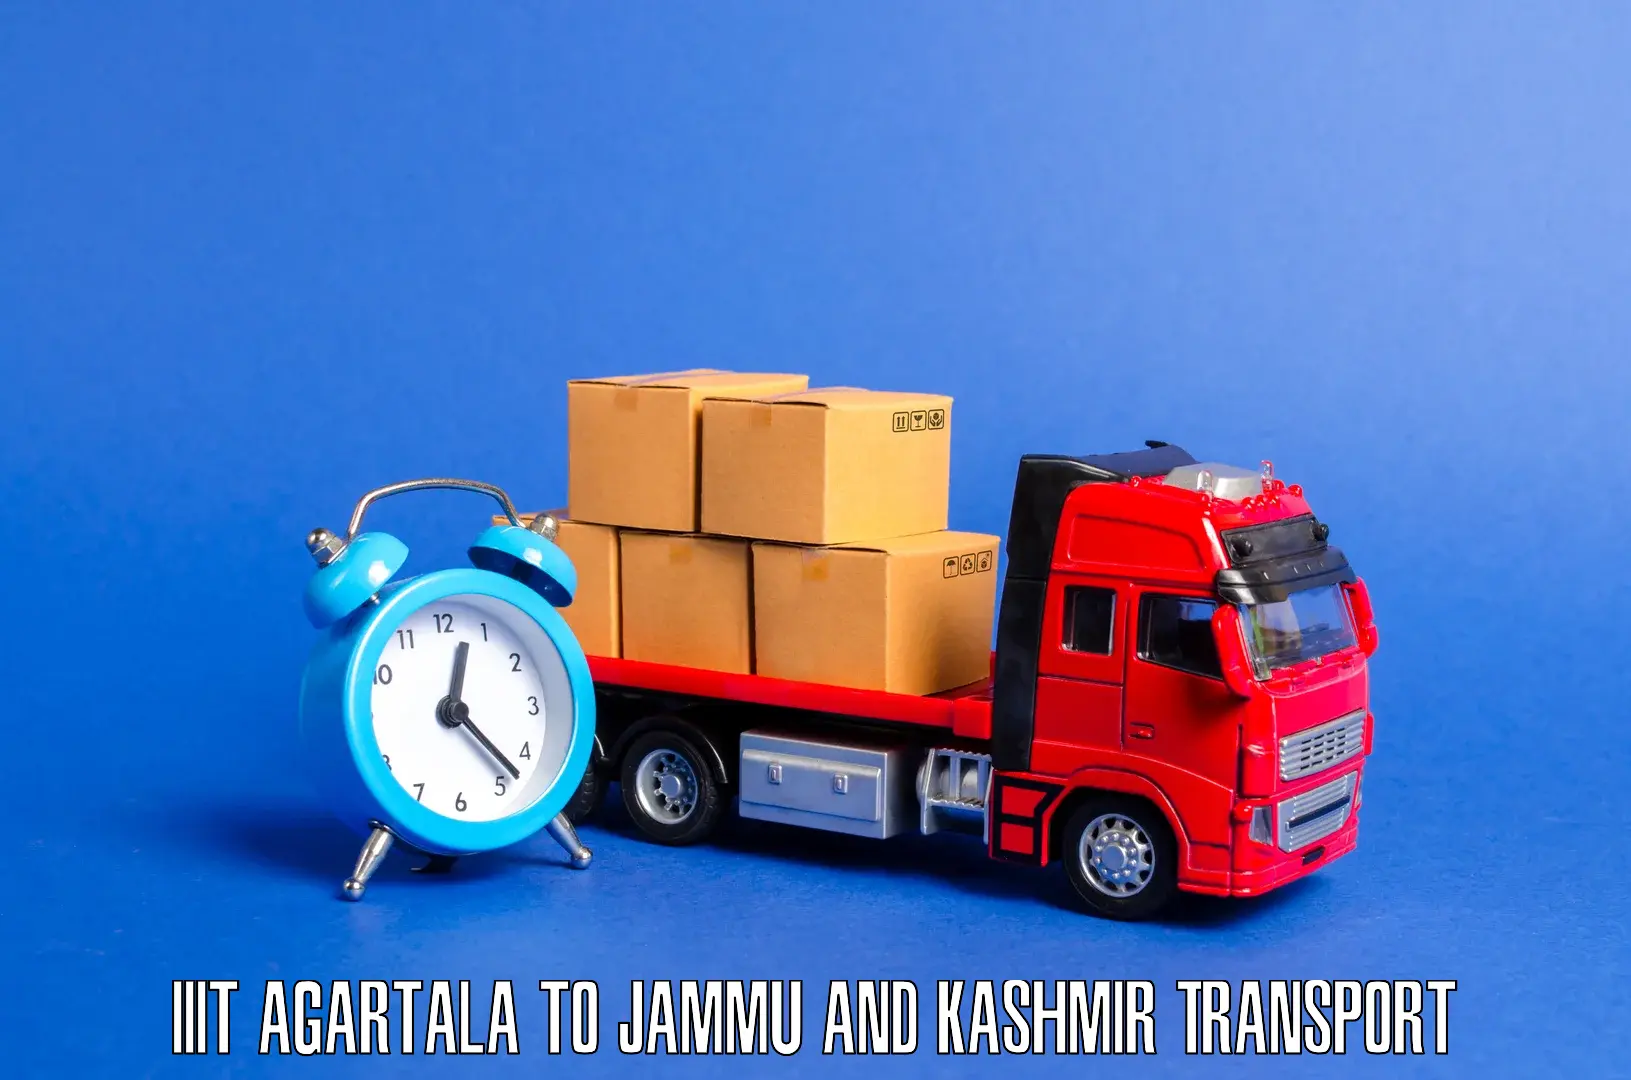 Lorry transport service in IIIT Agartala to Nagrota